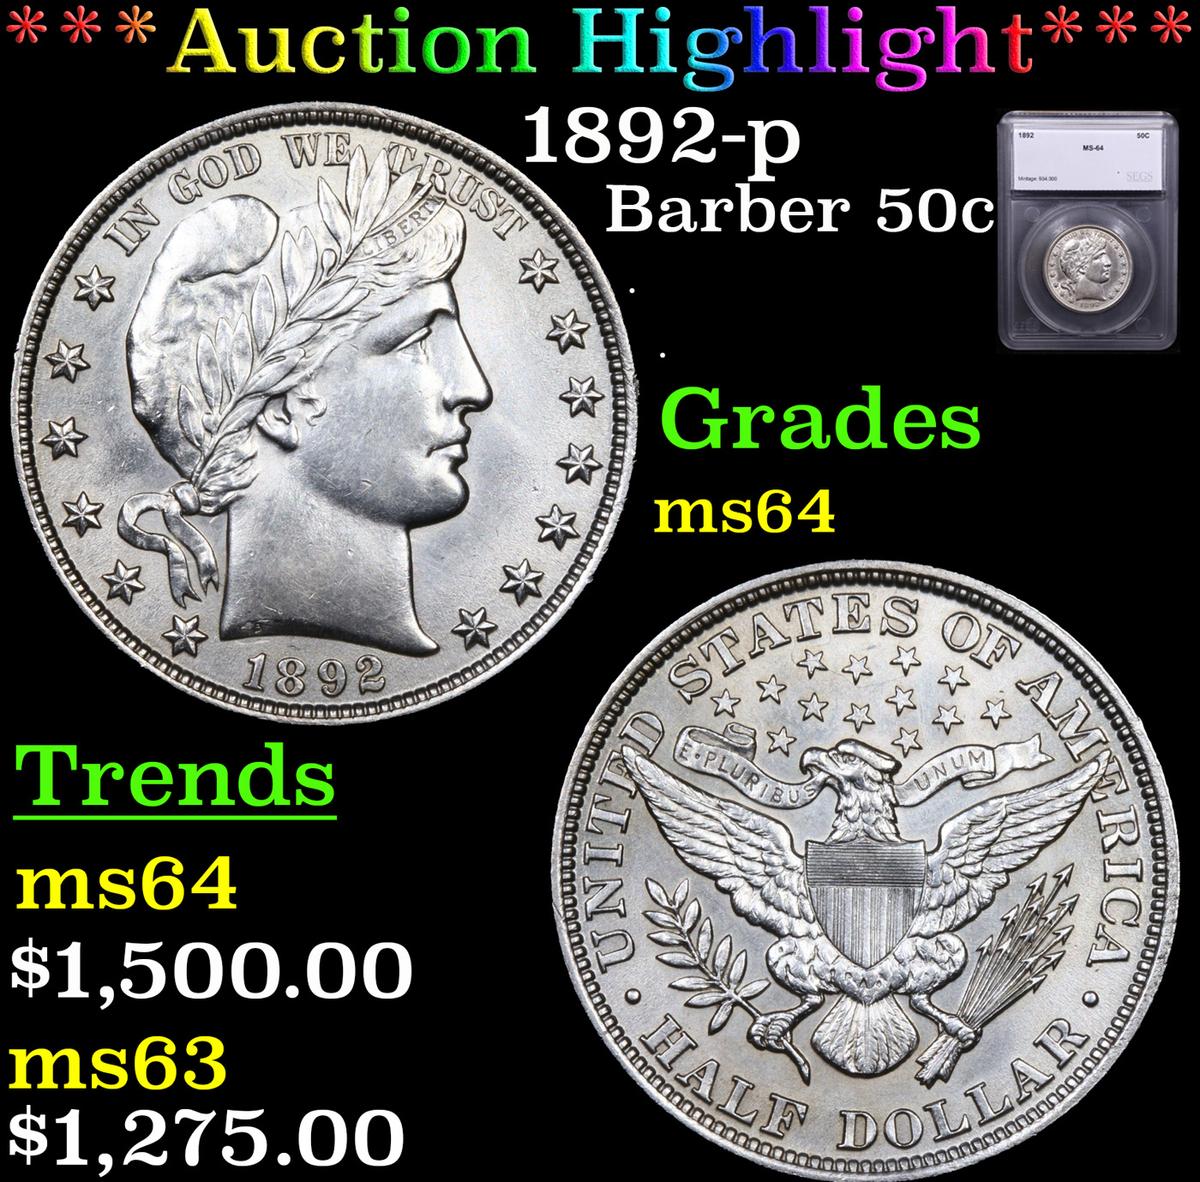 ***Auction Highlight*** 1892-p Barber Half Dollars 50c Graded ms64 By SEGS (fc)